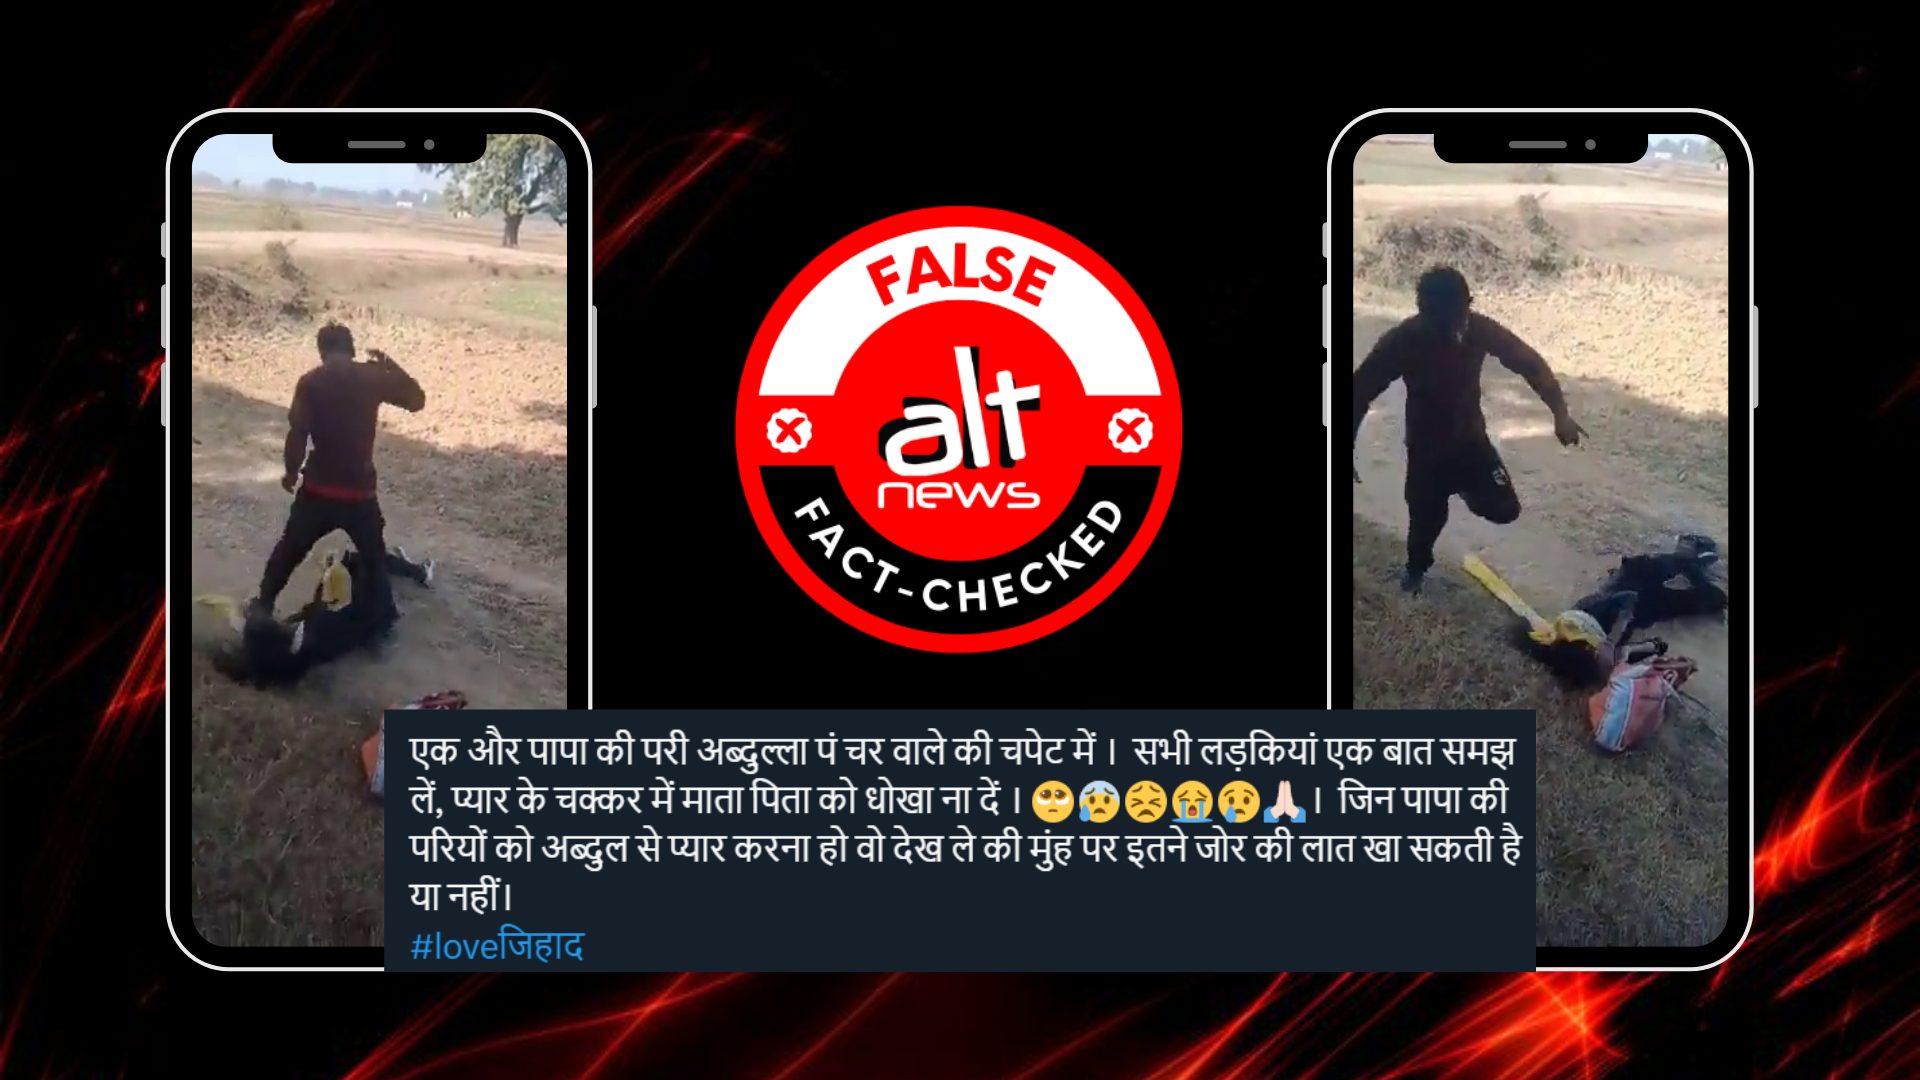 Madhya Pradesh: Video of assault on woman viral with false communal claim - Alt News